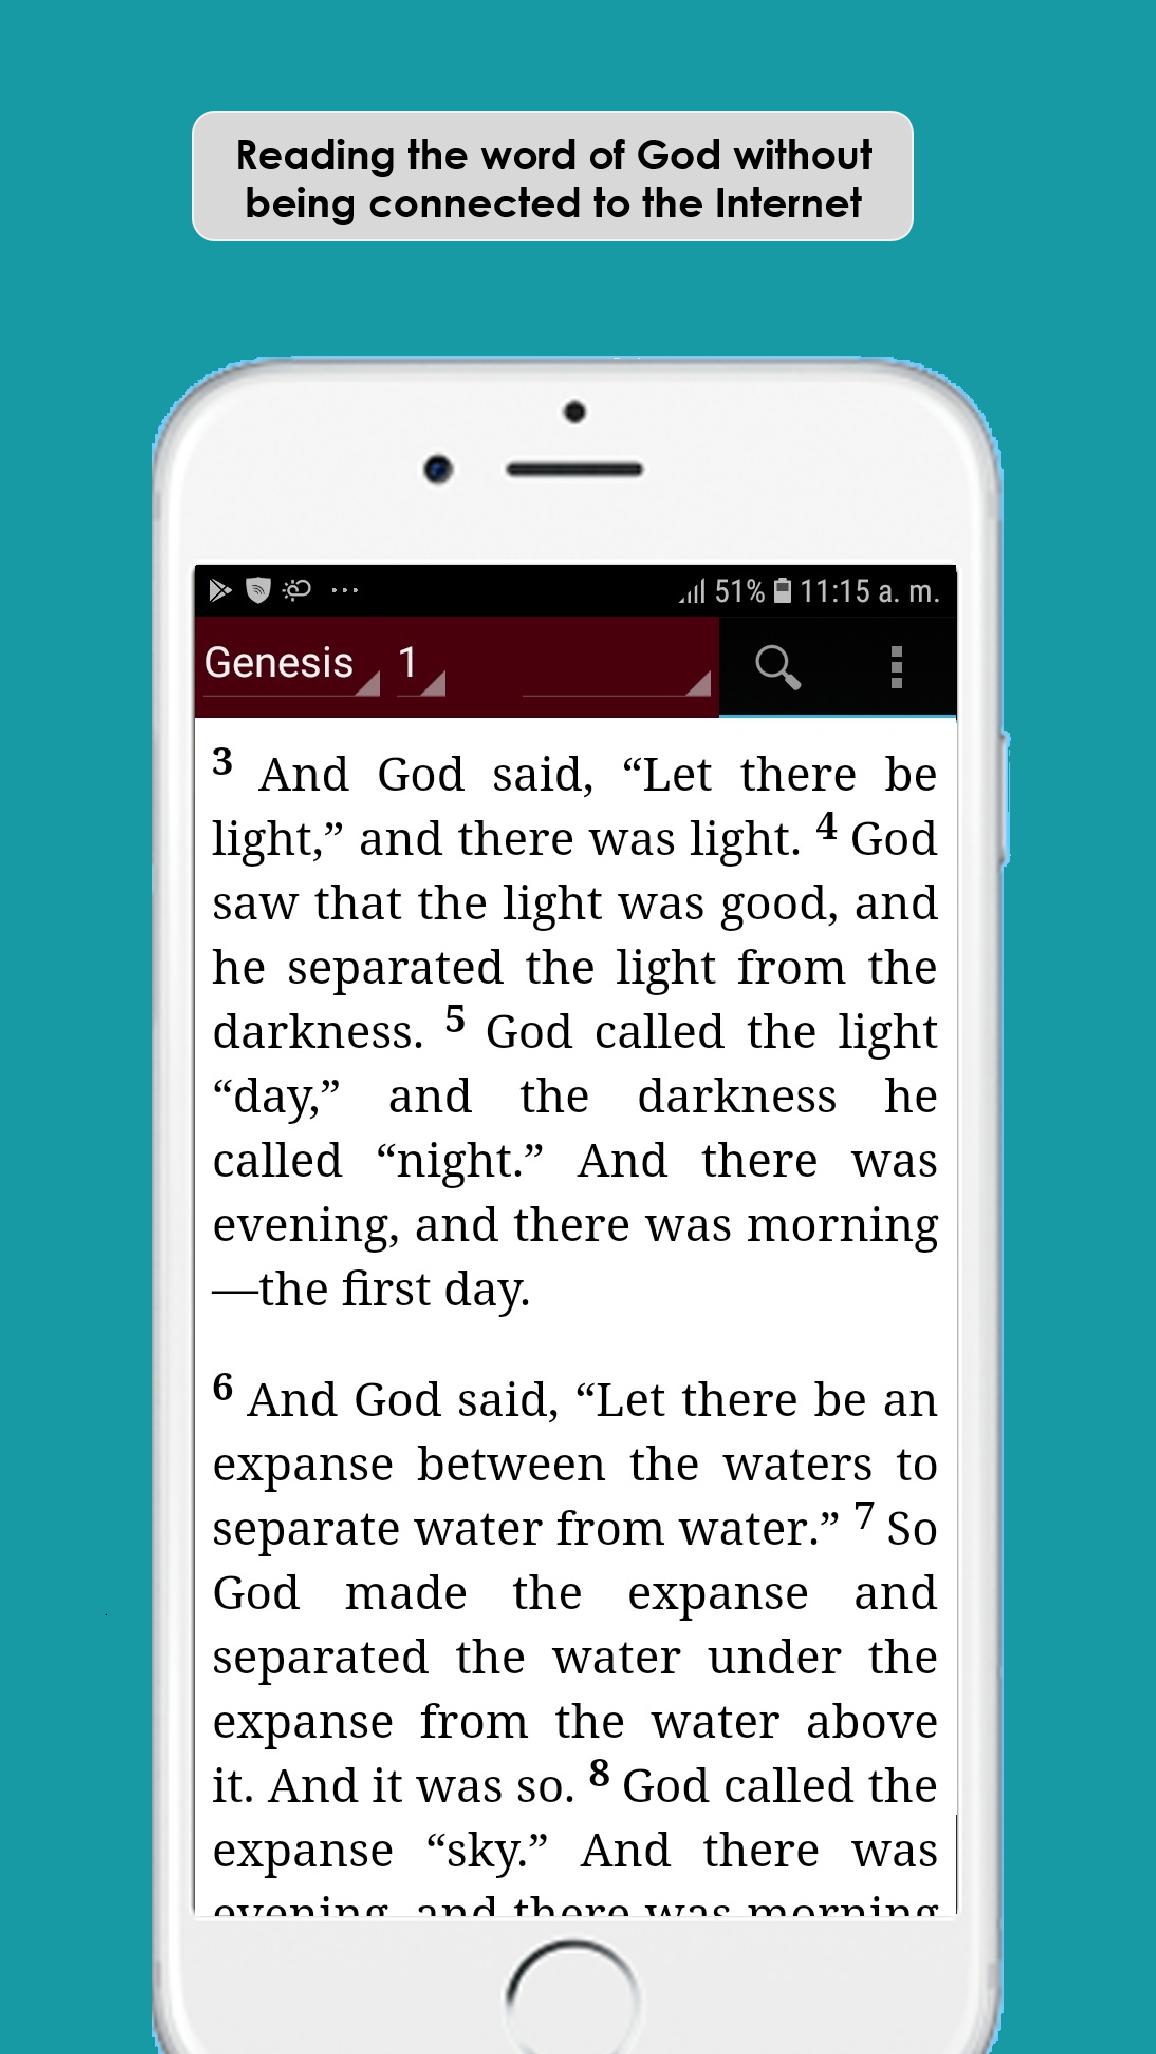 Bible The Passion Translation (TPT) Version Free 12.0 Screenshot 11